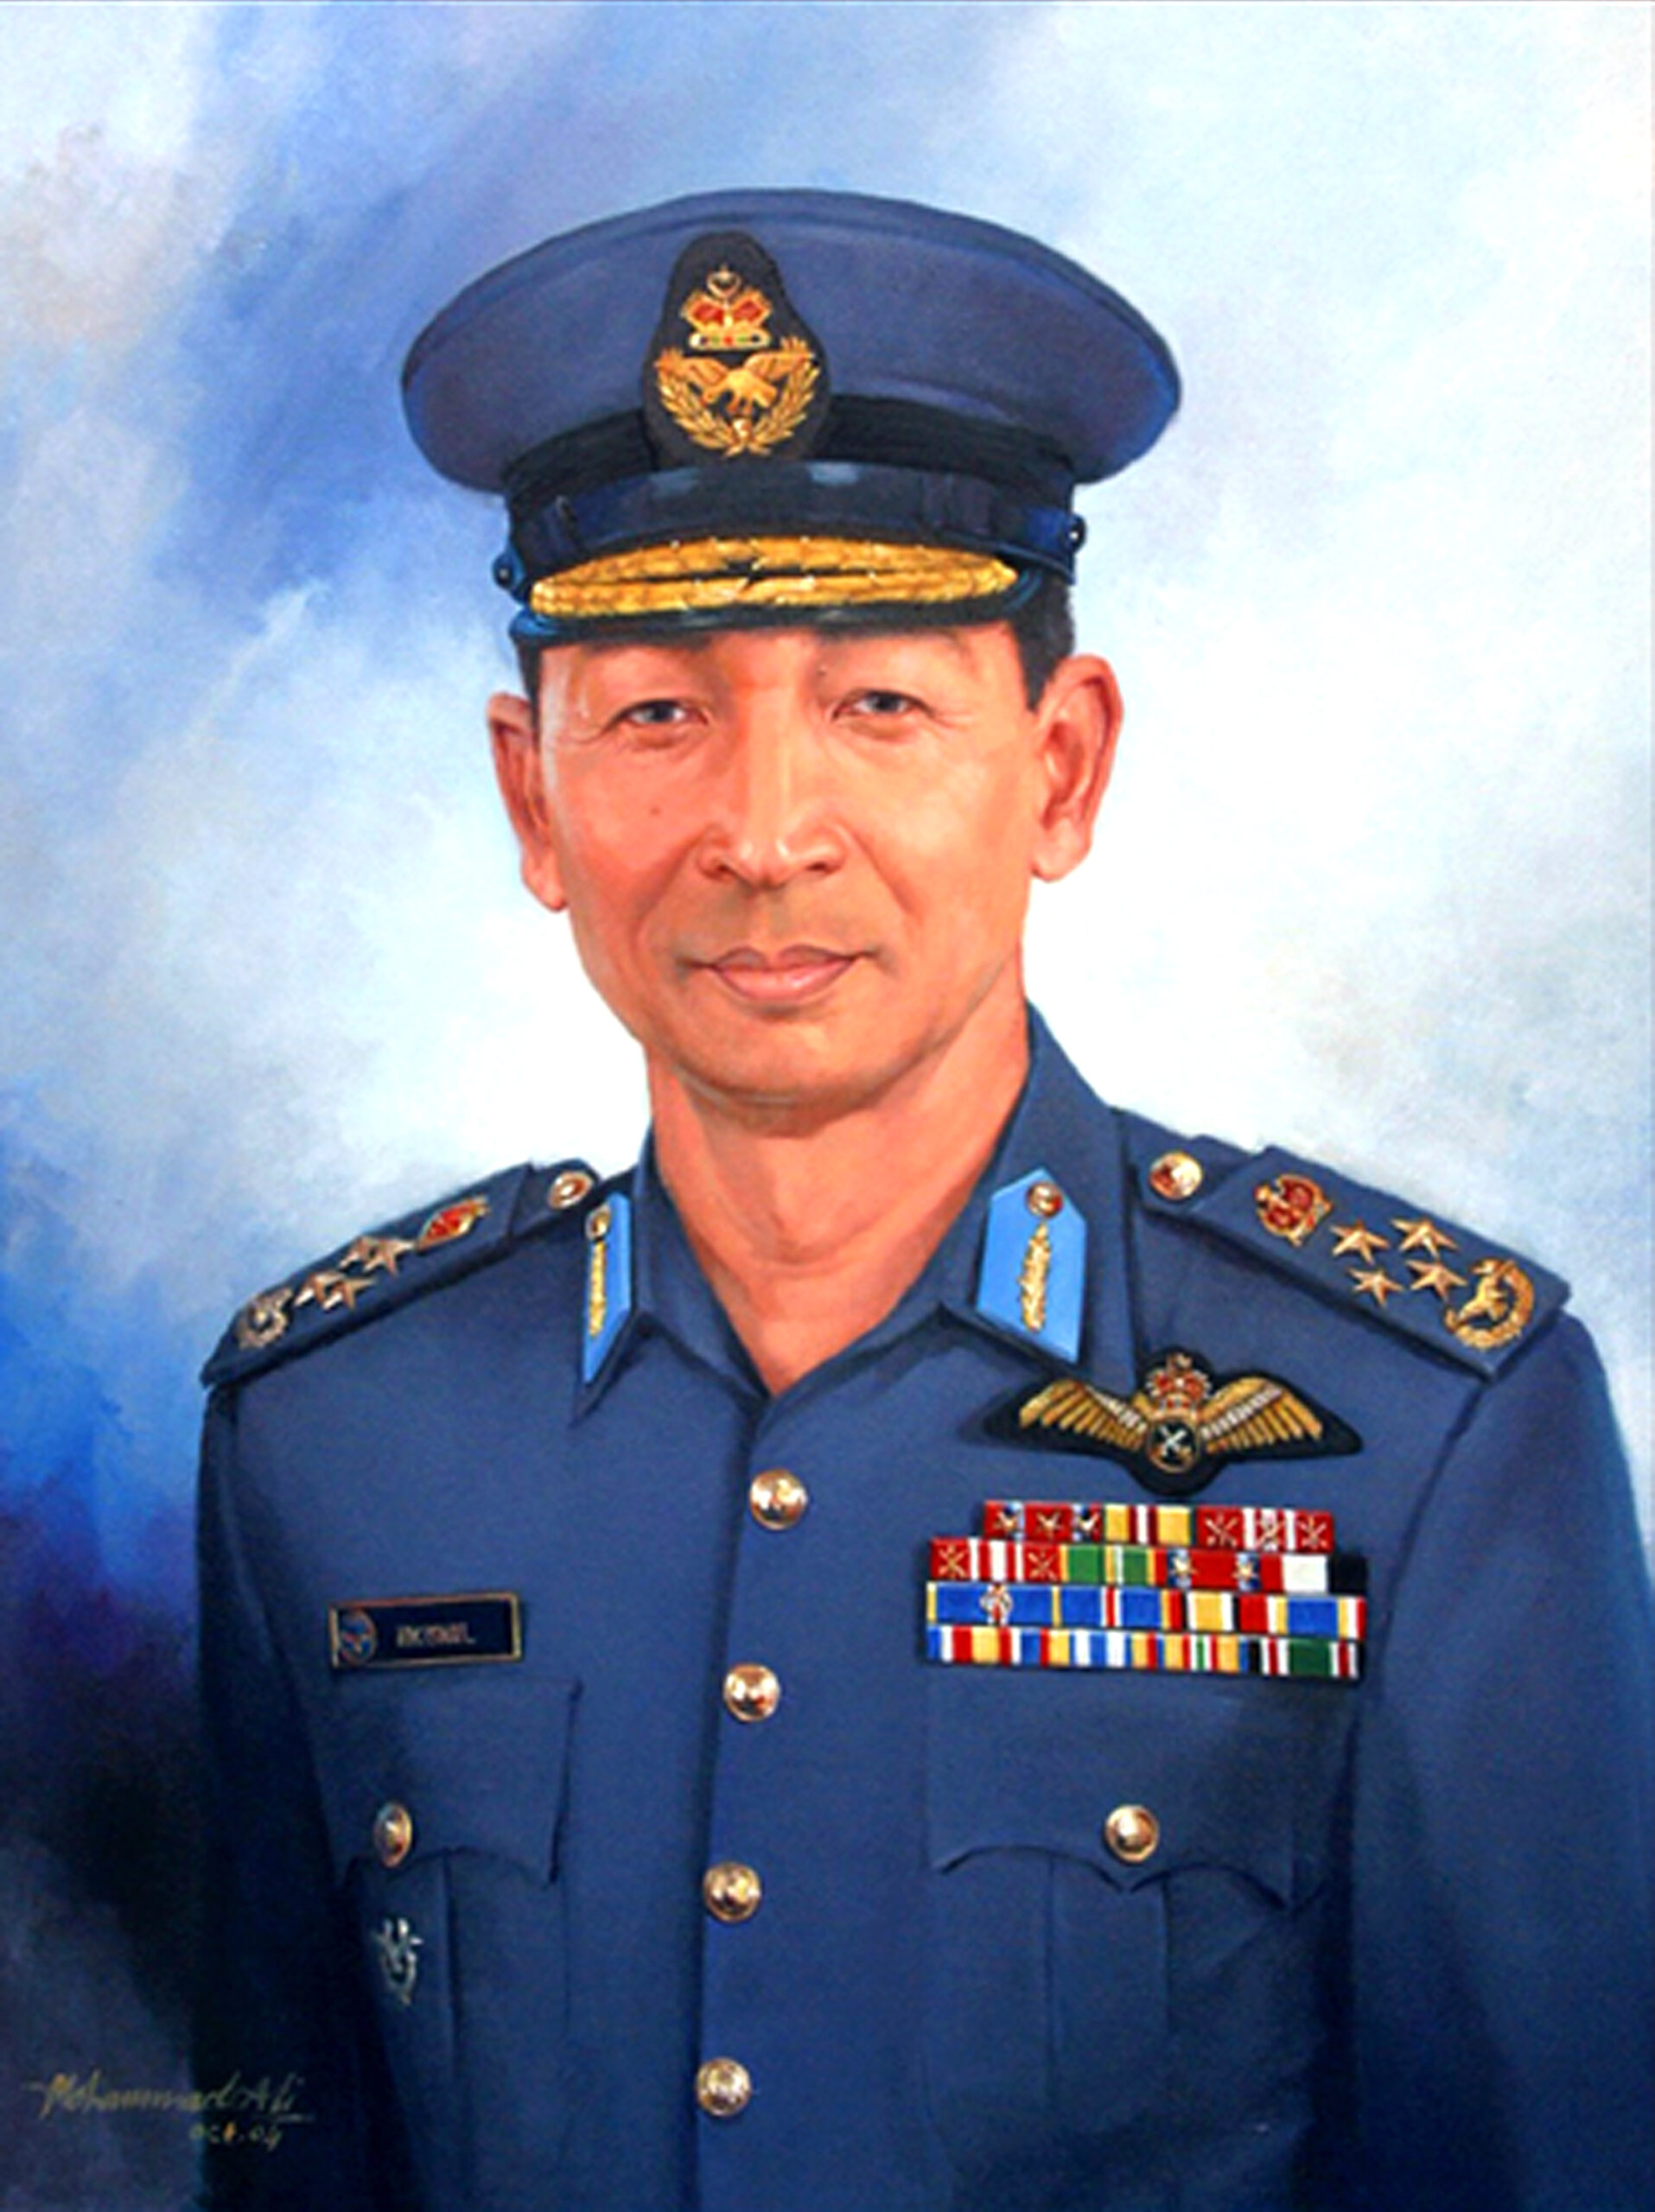 Air Chief Malaysia Oil on Canvas 24 X30 (2005)